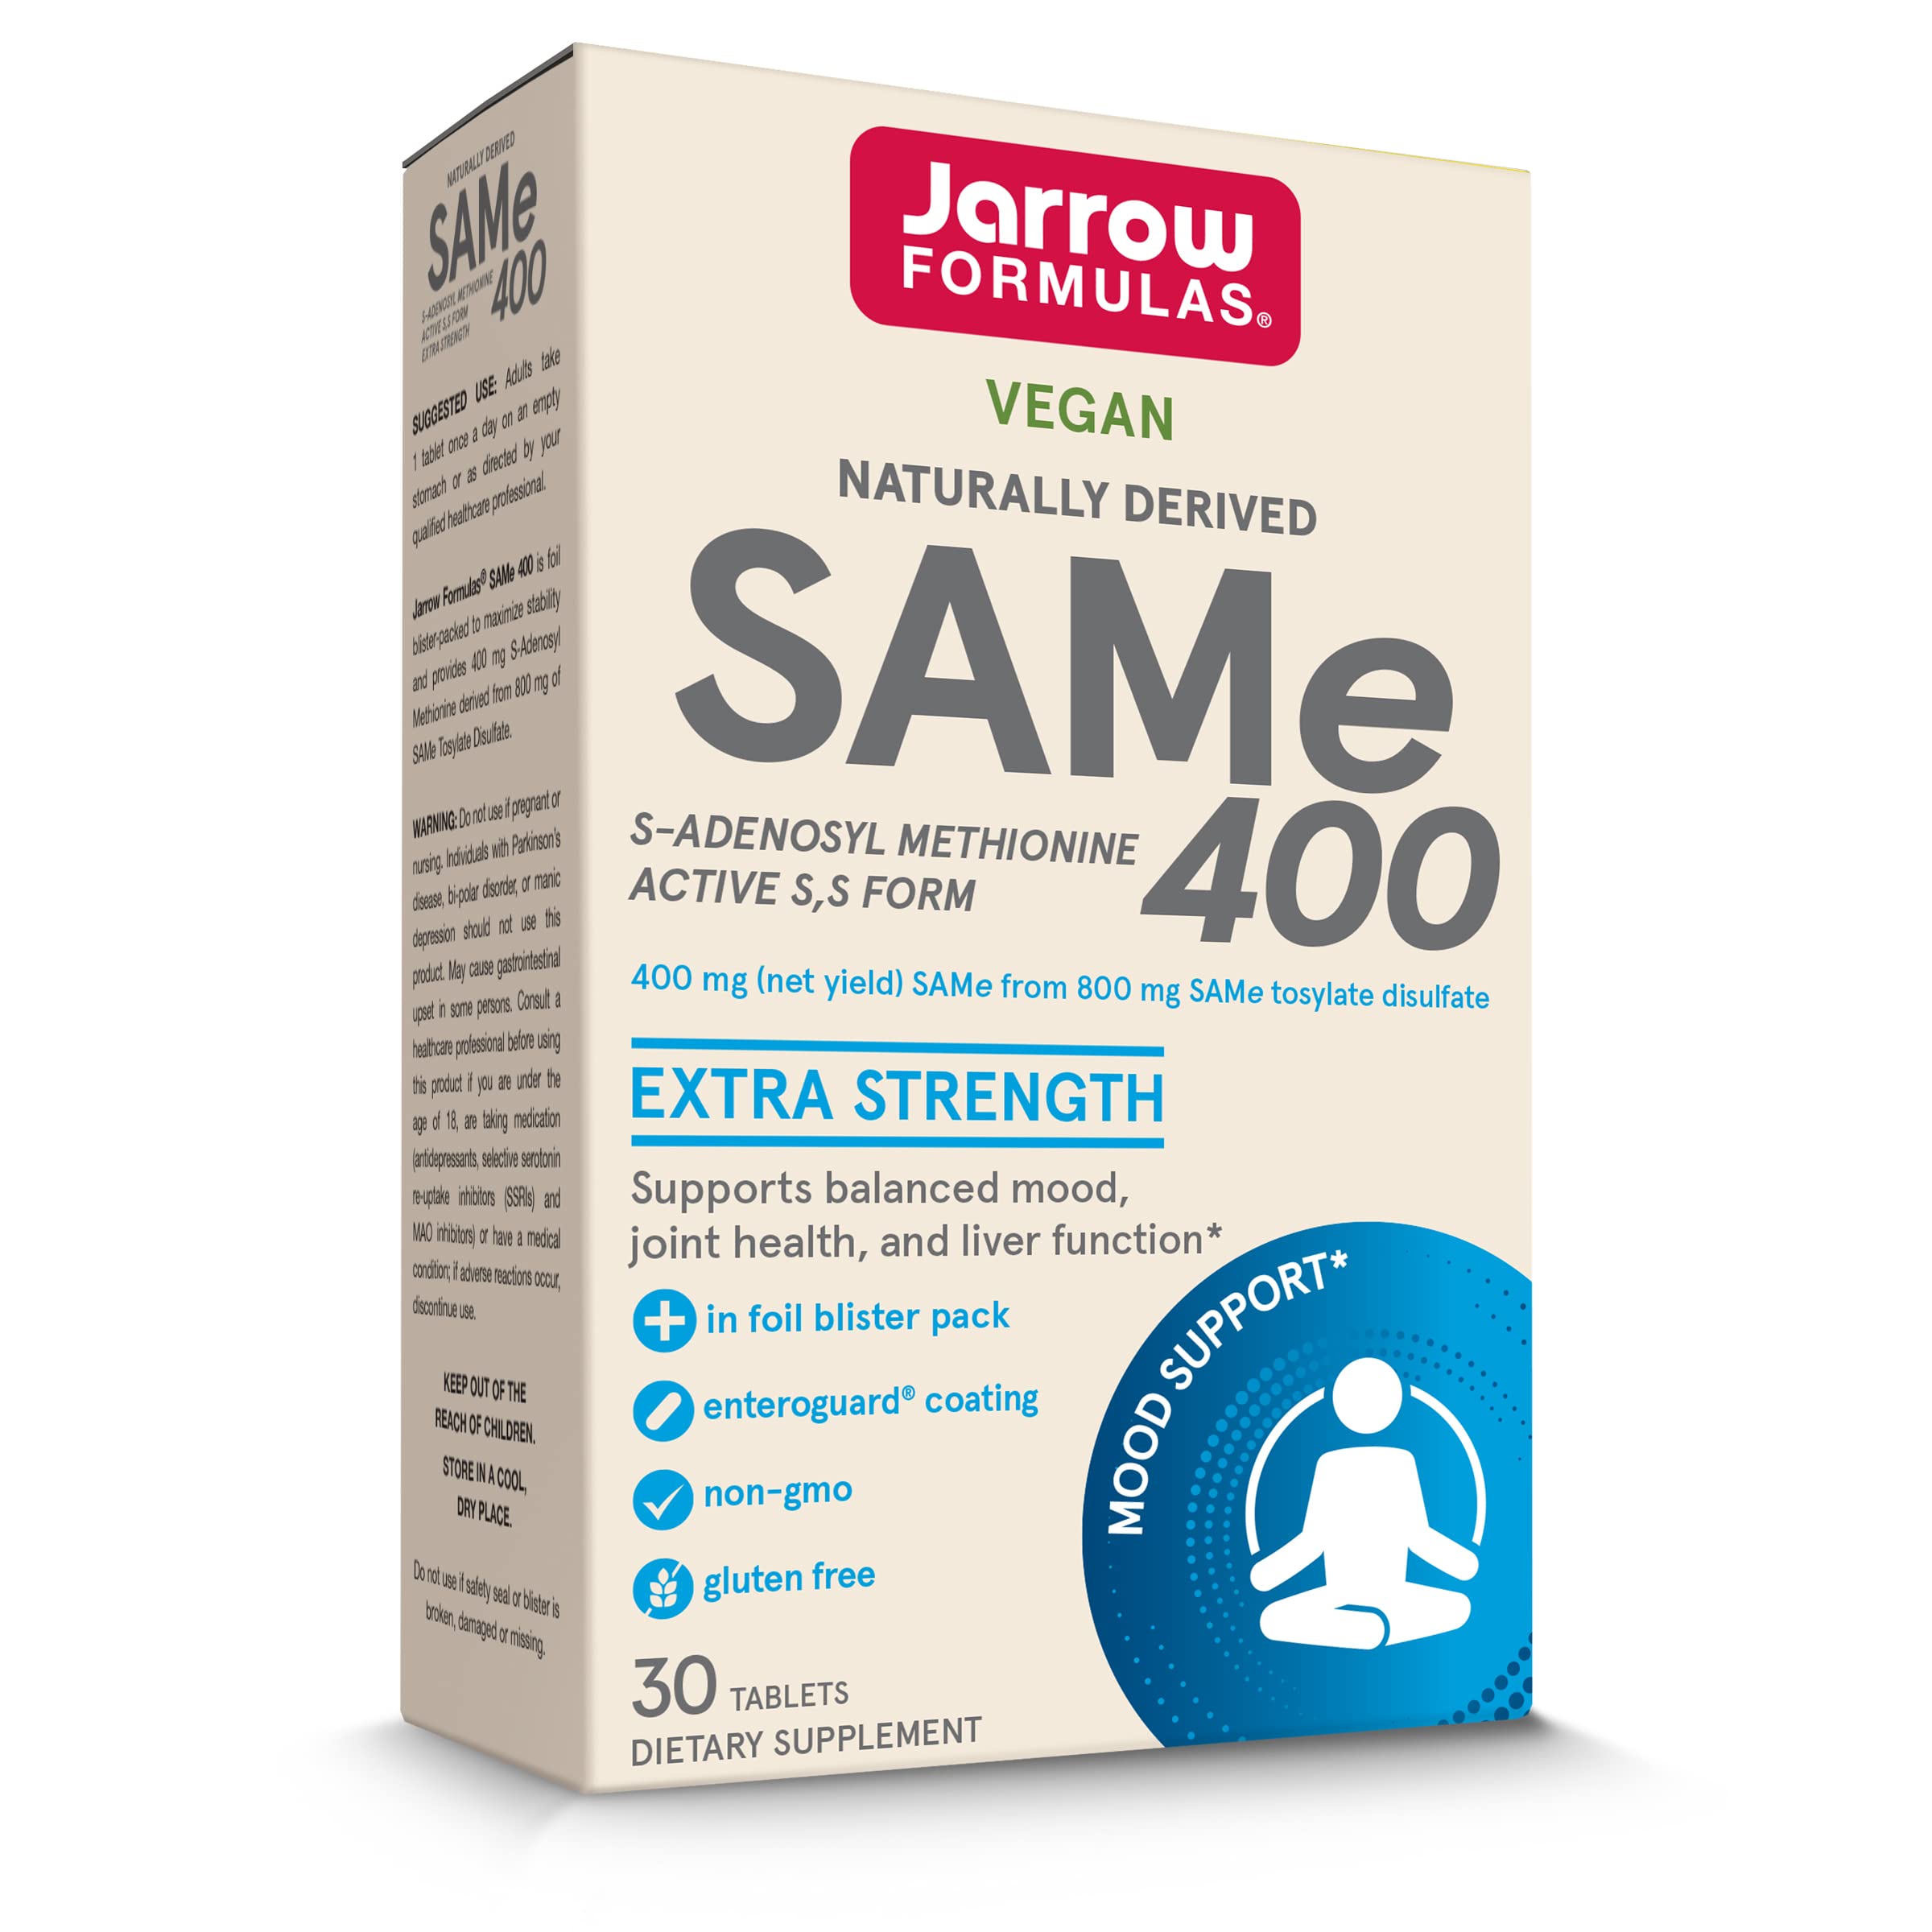 Jarrow Formulas SAMe 400 mg - 30 Tablets - Highest Concentration of Active S,S Form - Supports Joint Health, Liver Function, Brain Metabolism, Mood & Antioxidant Defense - 30 Servings